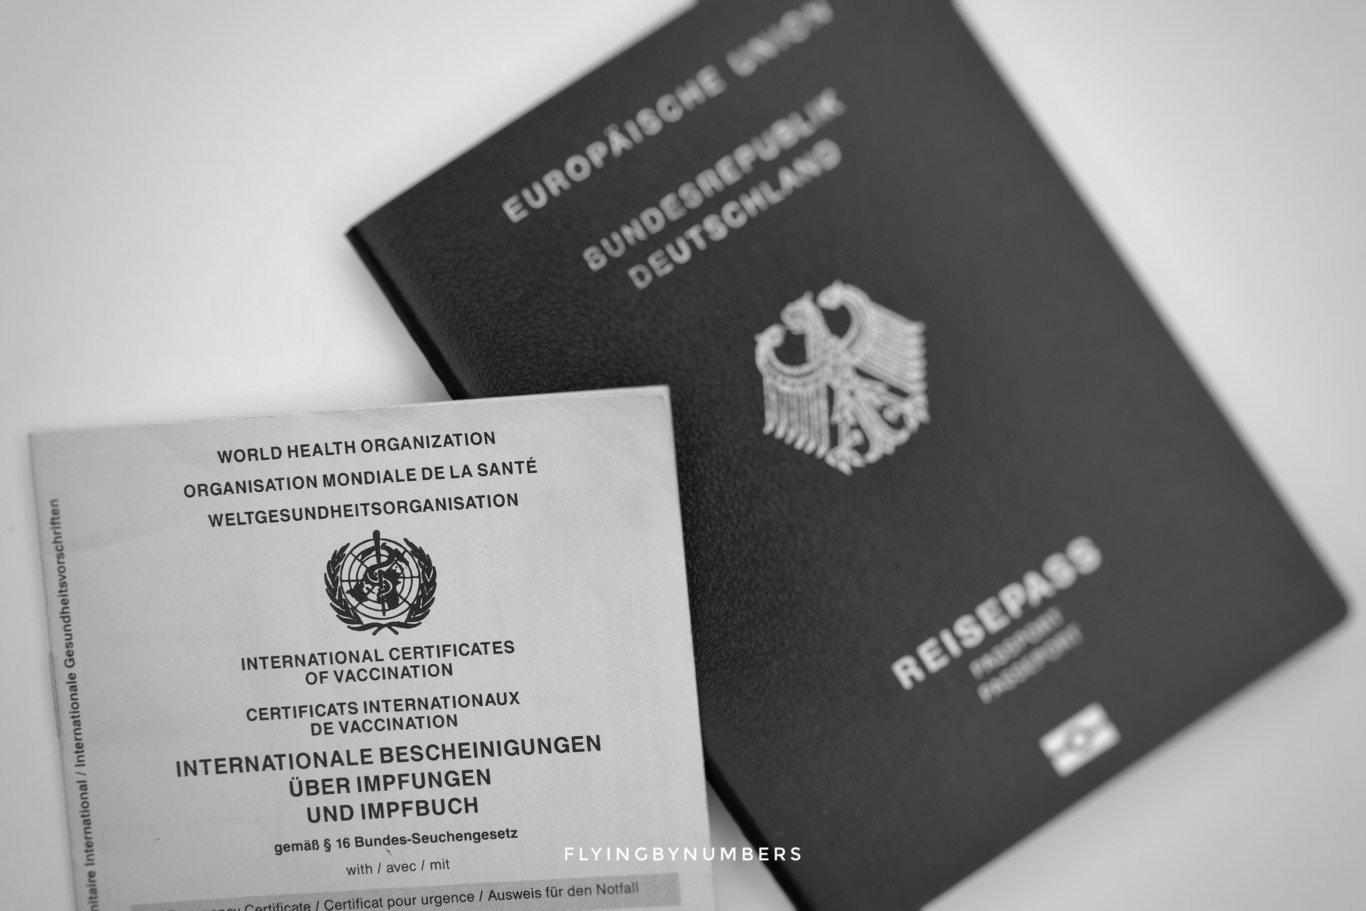 Passport and international certificate of vaccination